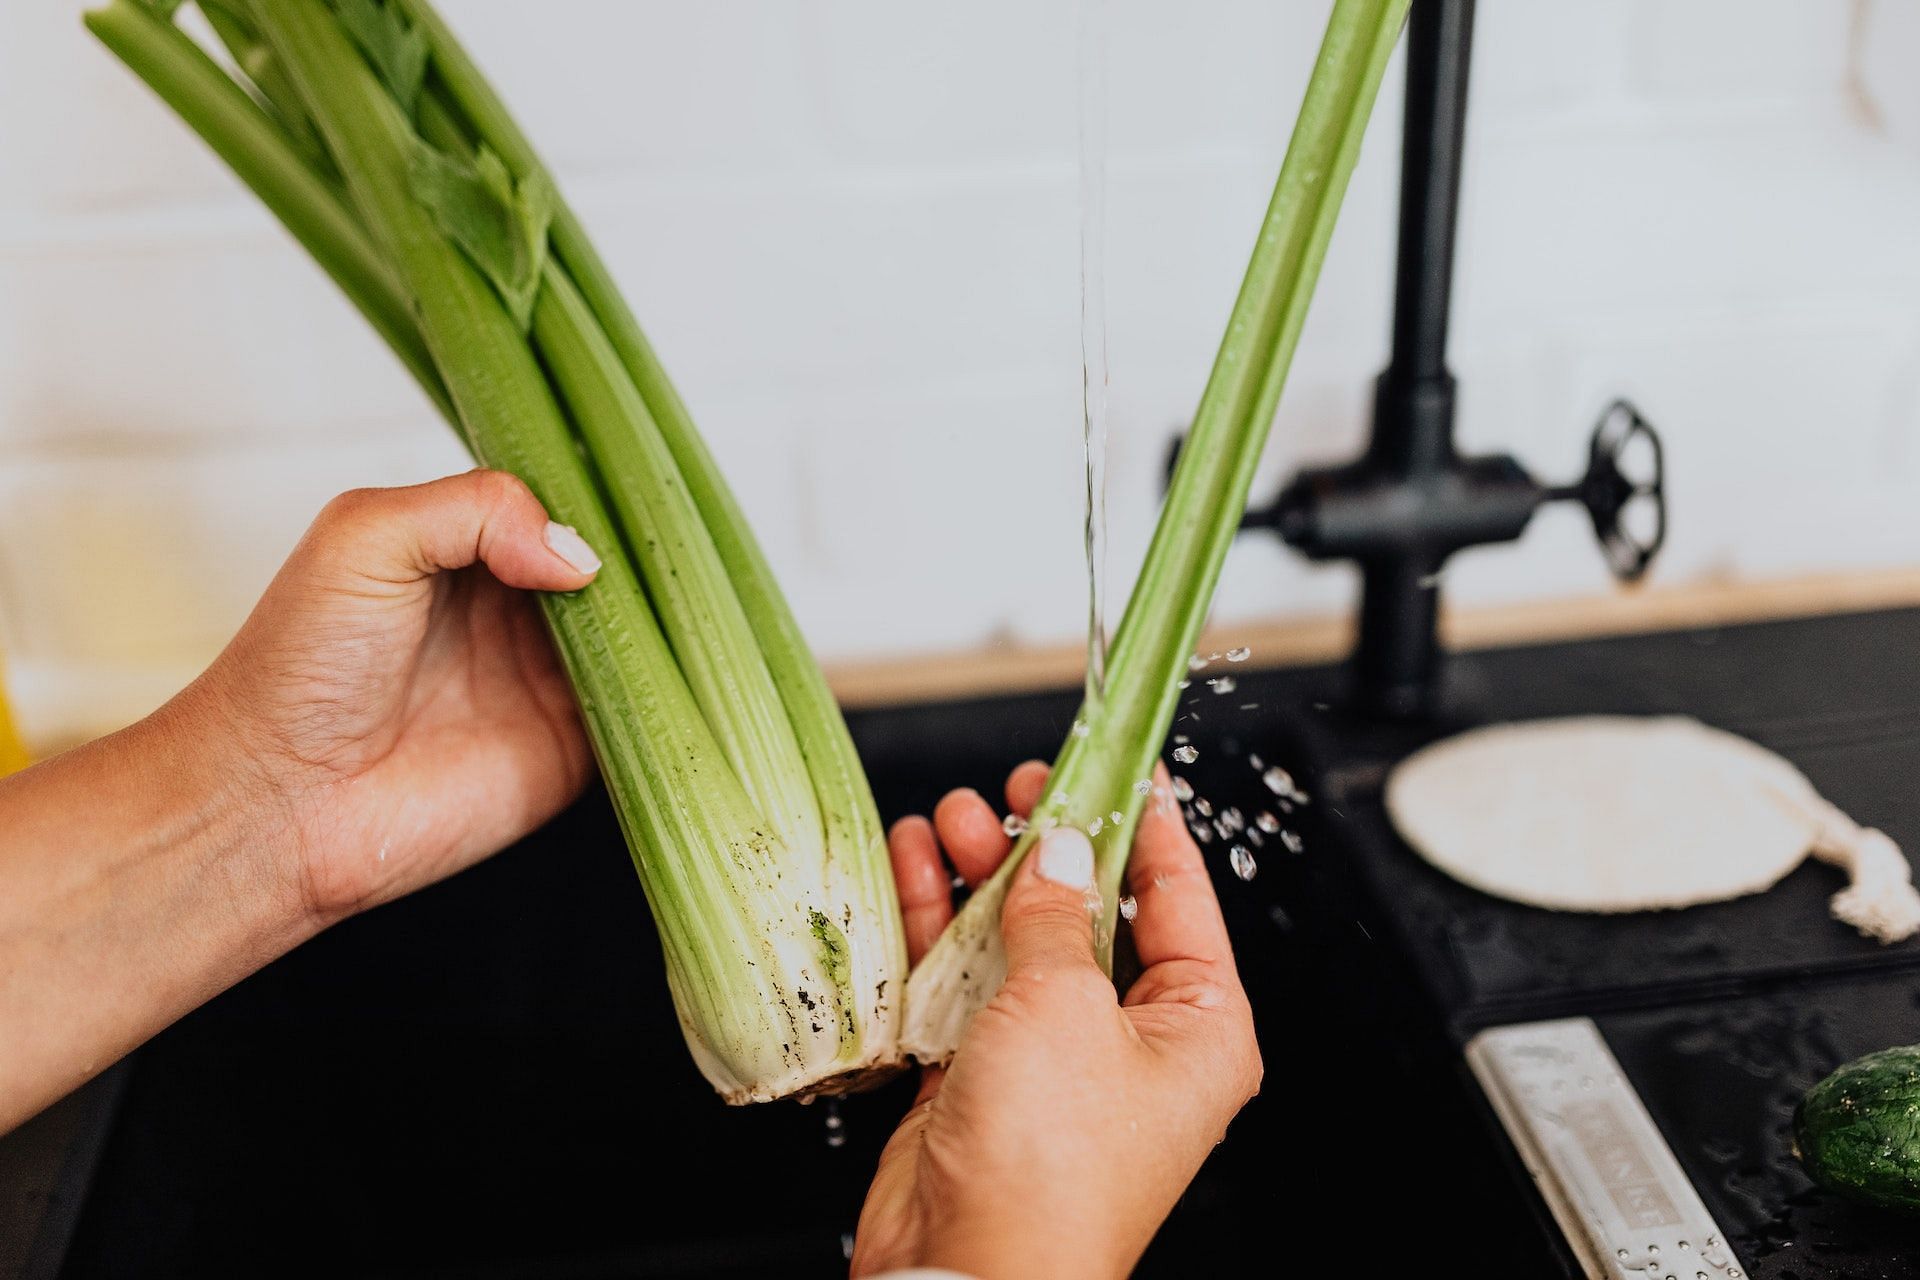 Celery has blood-pressure lowering properties. (Photo via Pexels/Karolina Grabowska)